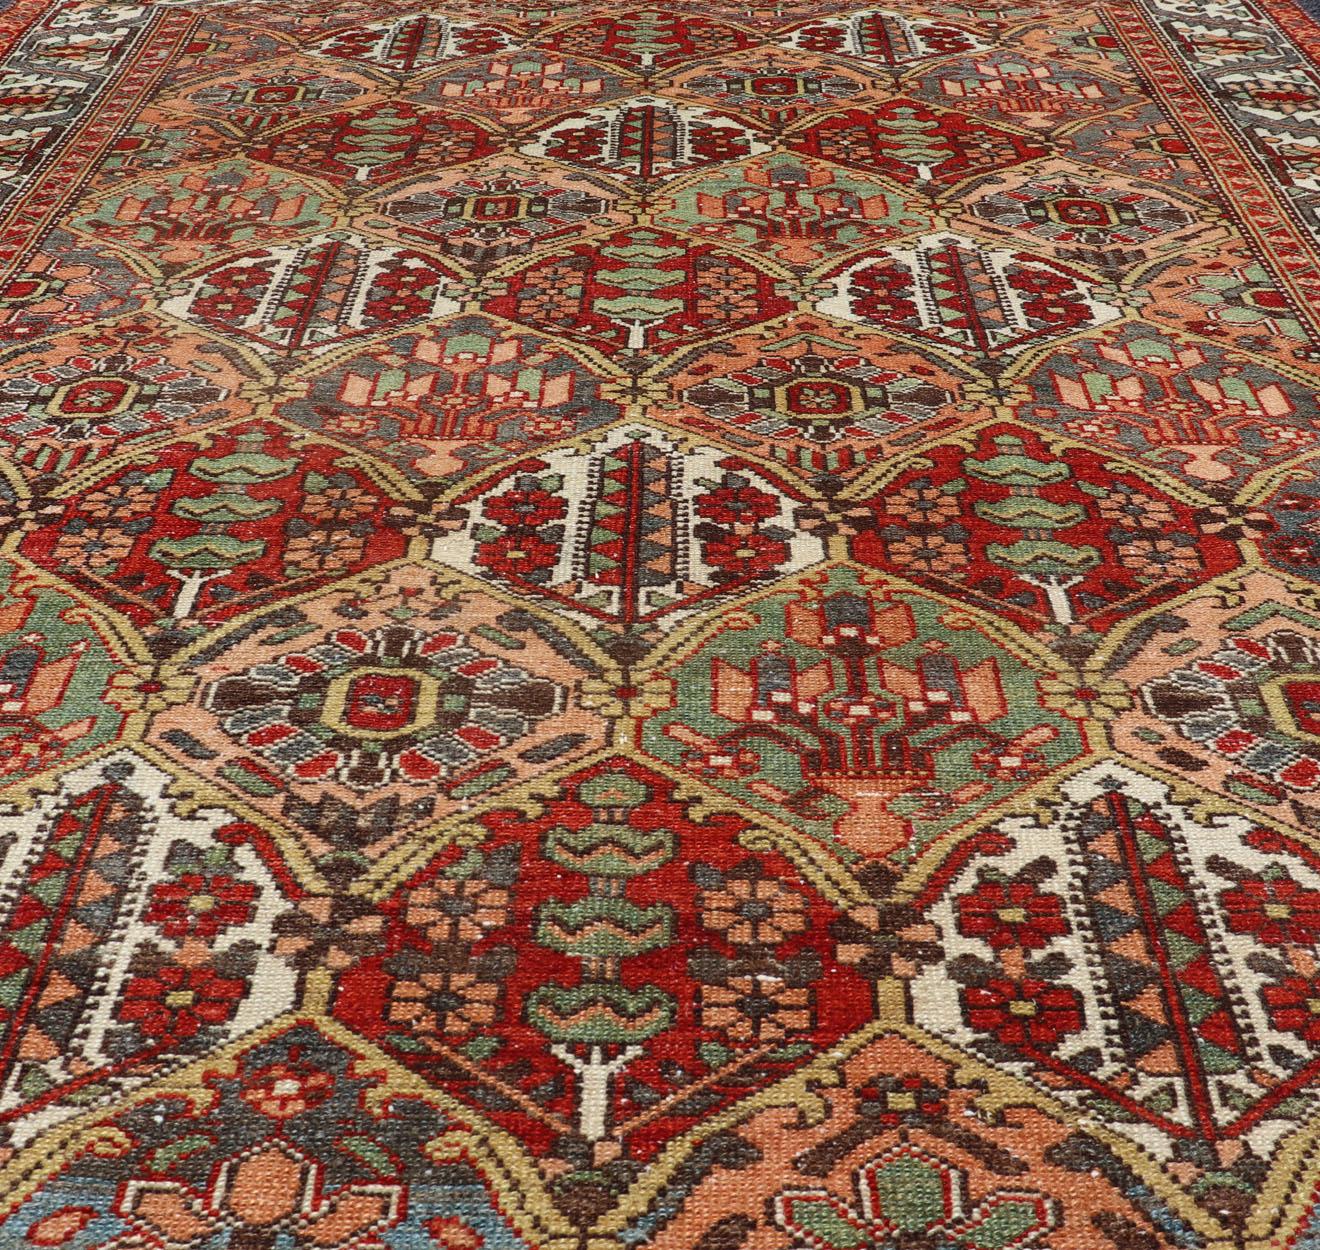 Antique Persian Diamond Garden Design Bakhtiari Rug in Multi Colors For Sale 6